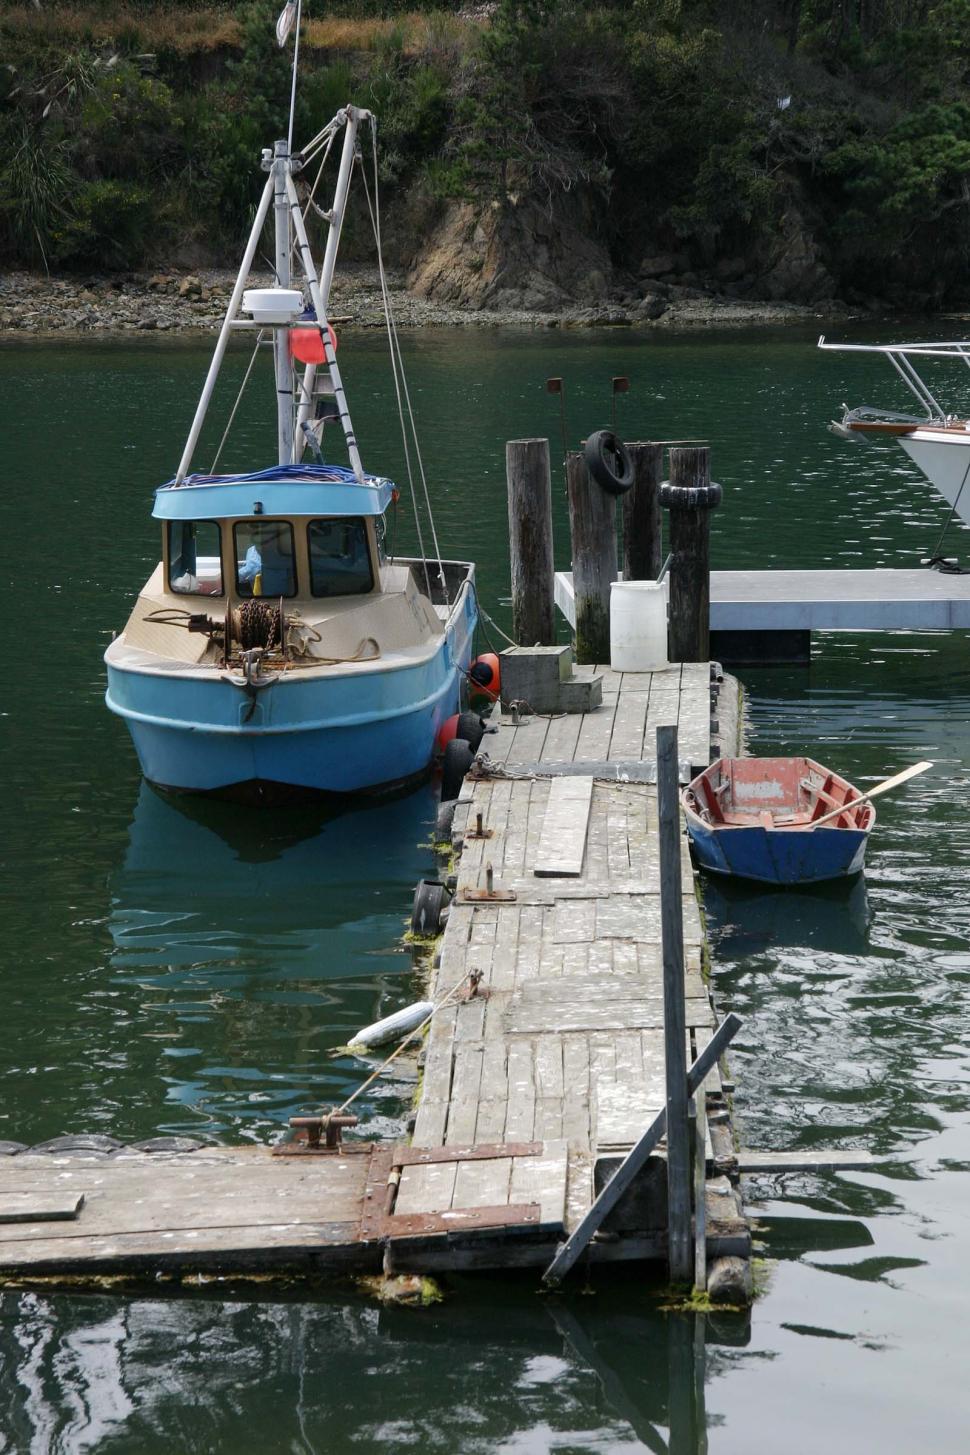 Free Image of Fishing boat docked 